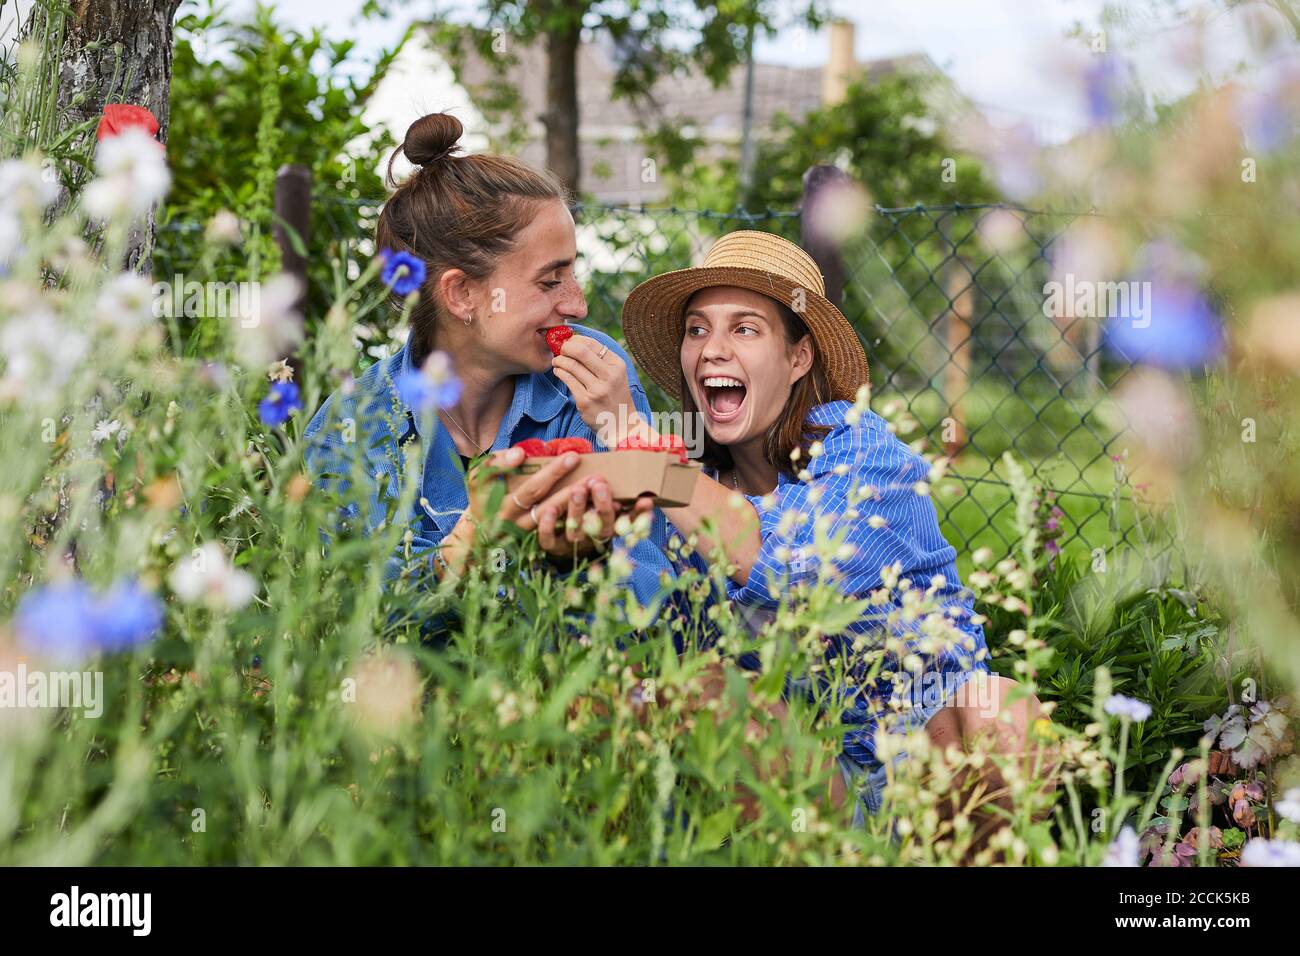 Cheerful woman feeding strawberry to female friend in garden Stock Photo